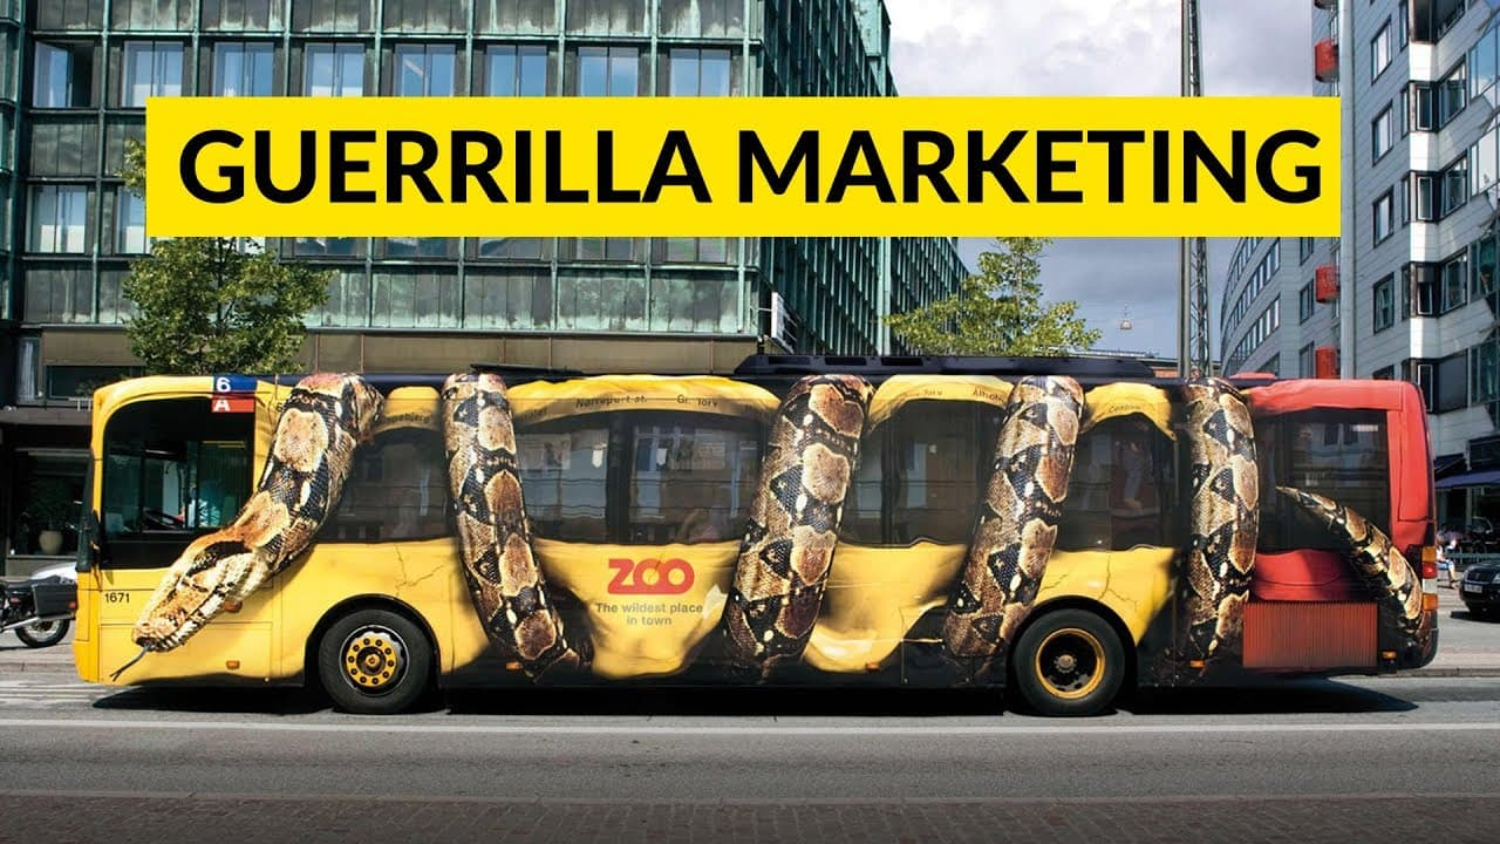 Guerrilla Marketing examples of viral marketing